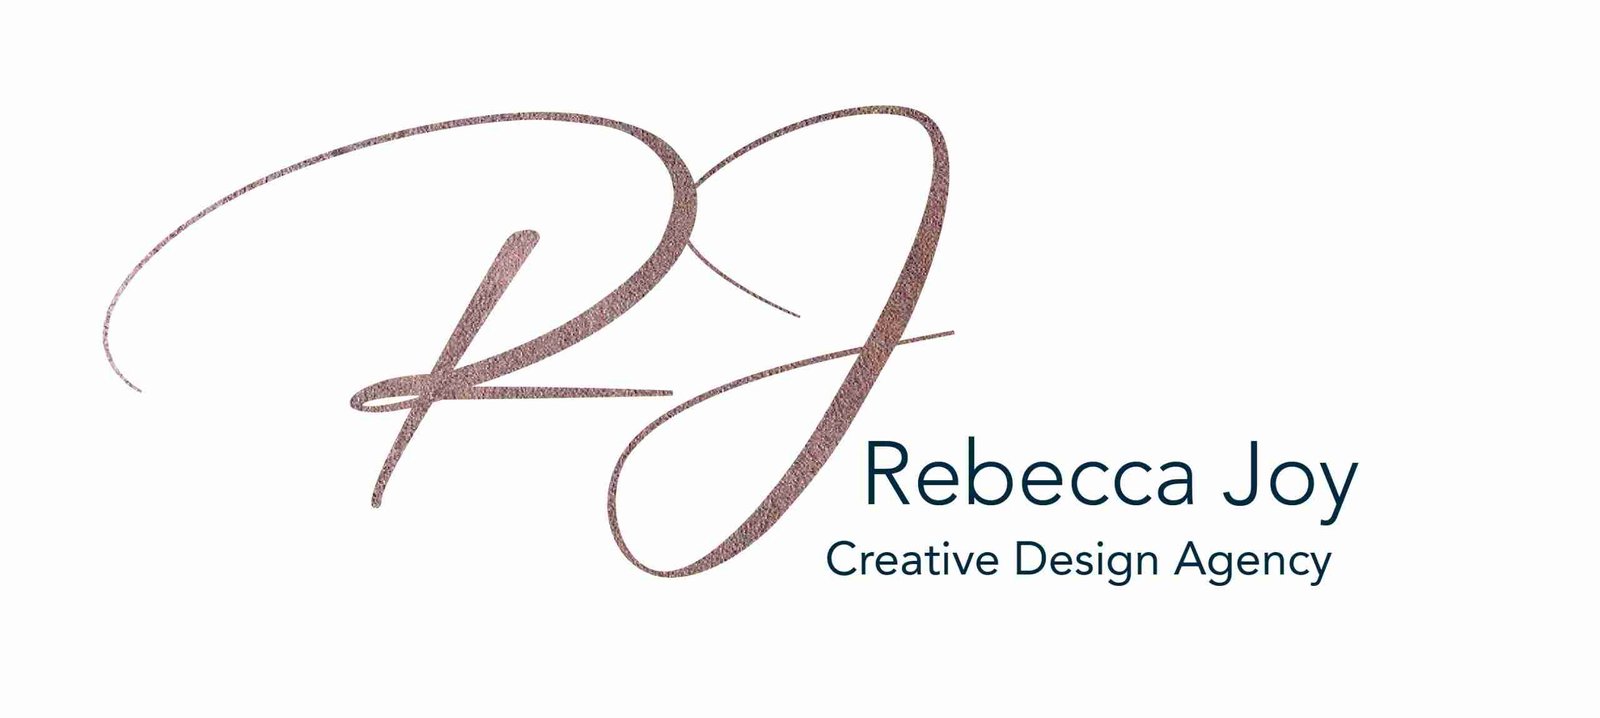 Rebecca Joy creative design agency logo